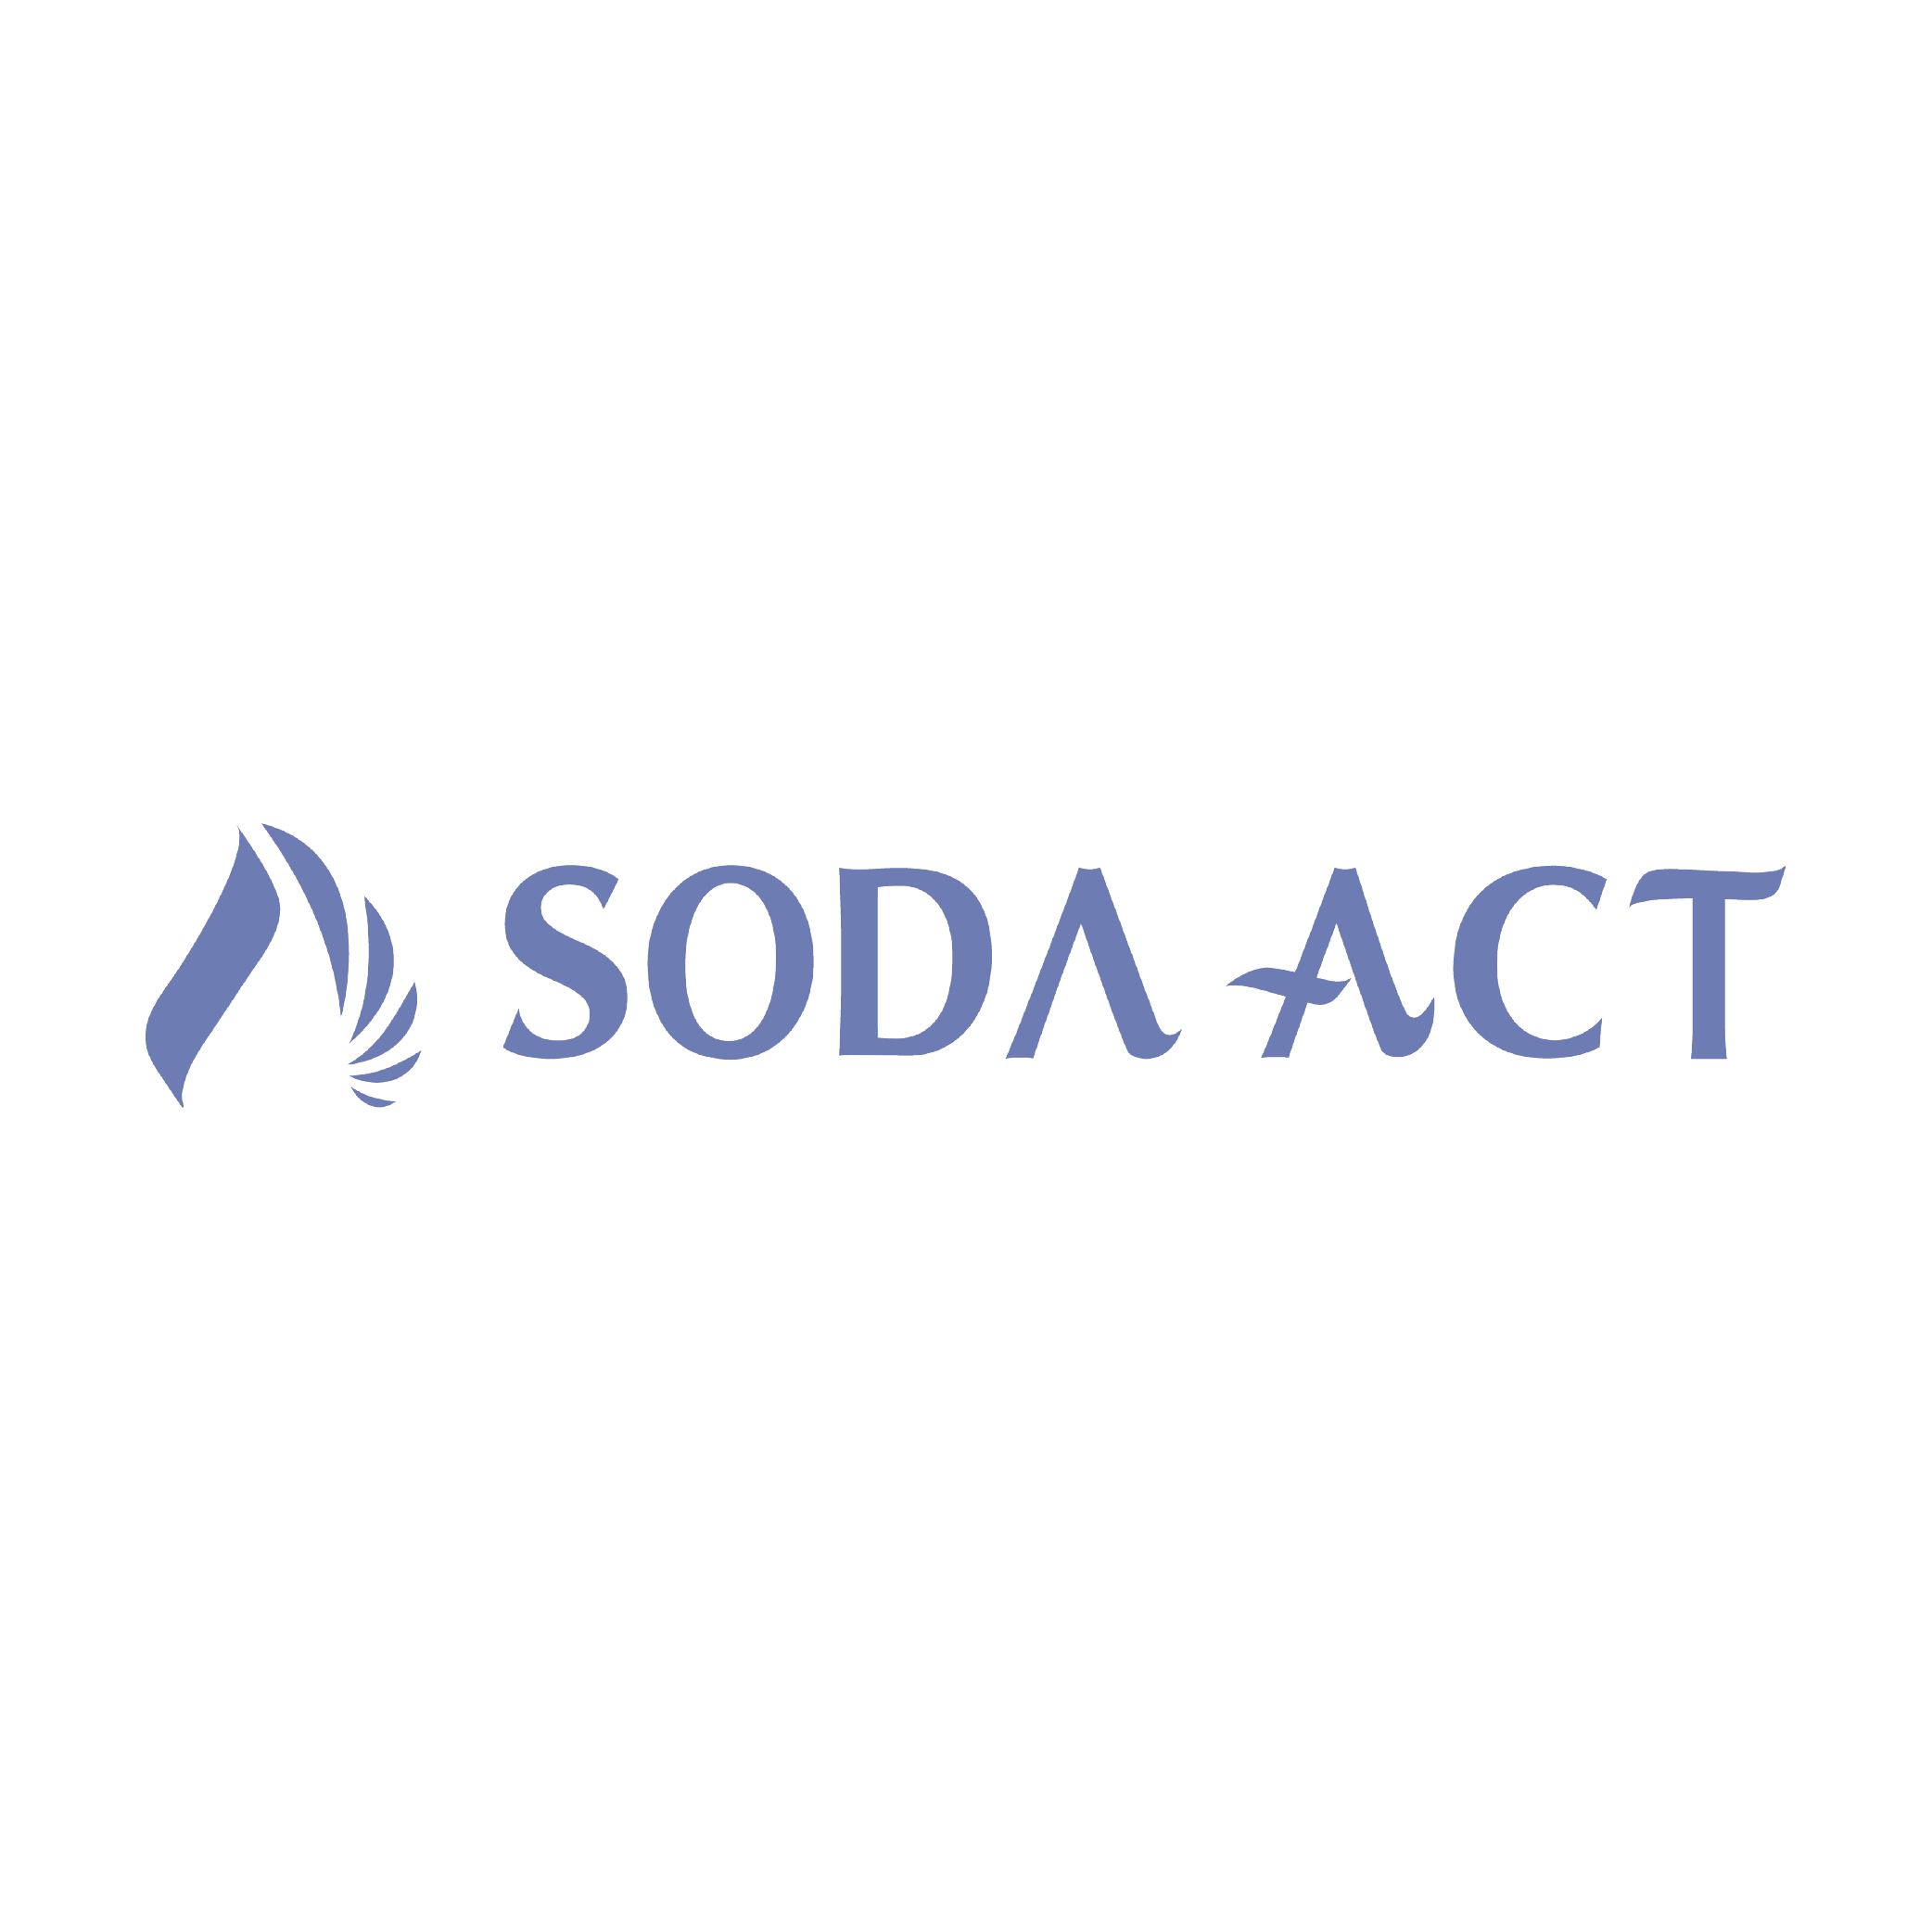 SODAACT_logo1